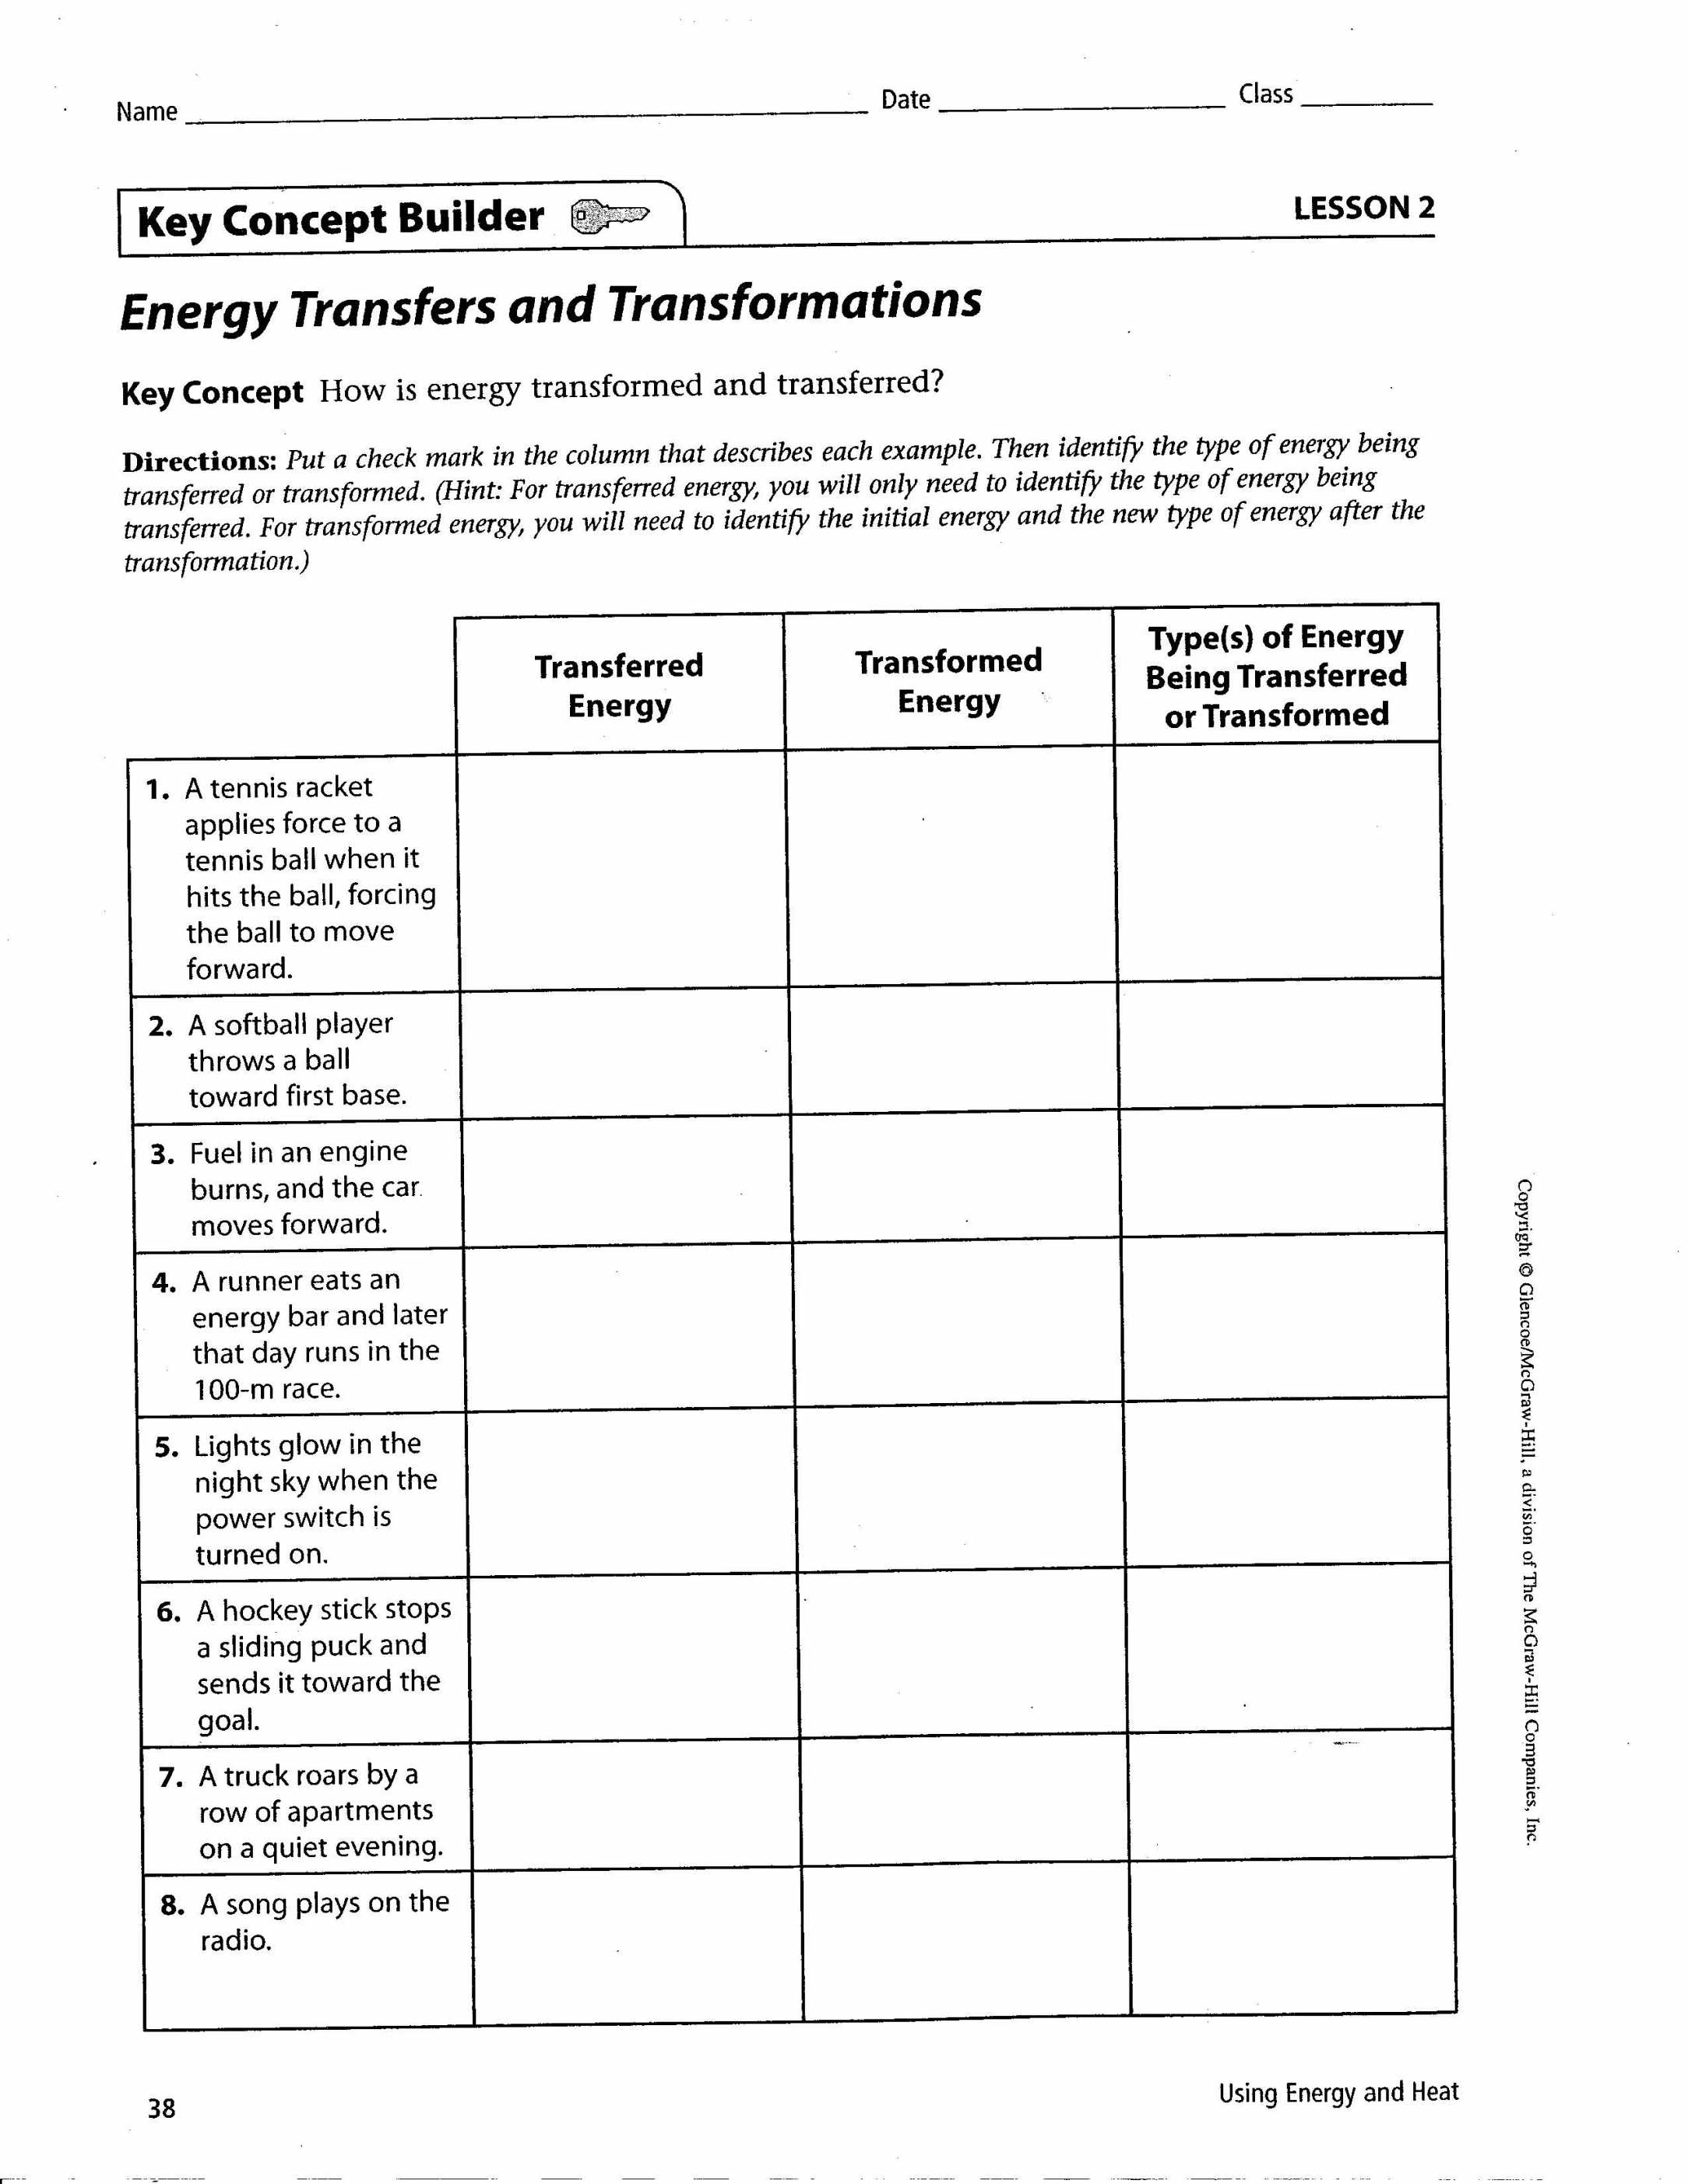 Conduction Convection or Radiation Worksheet Answers Along with Worksheet Energy Transfer Worksheet Idea Quiz Worksheet Phase